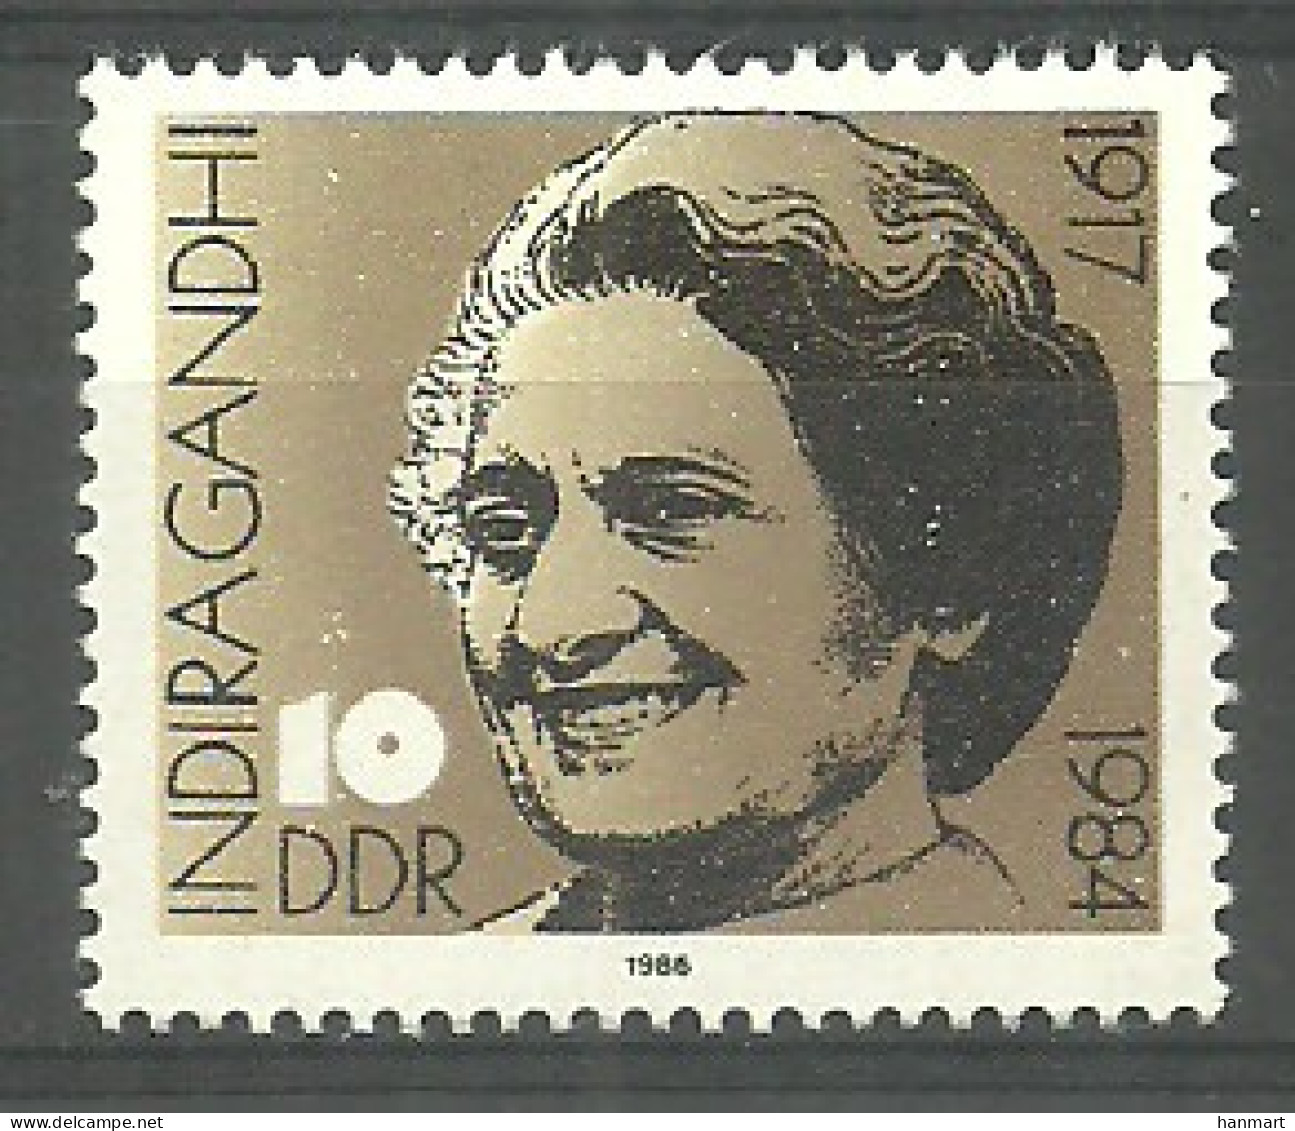 Germany, Democratic Republic (DDR) 1986 Mi 3056 MNH  (ZE5 DDR3056) - Famous Ladies